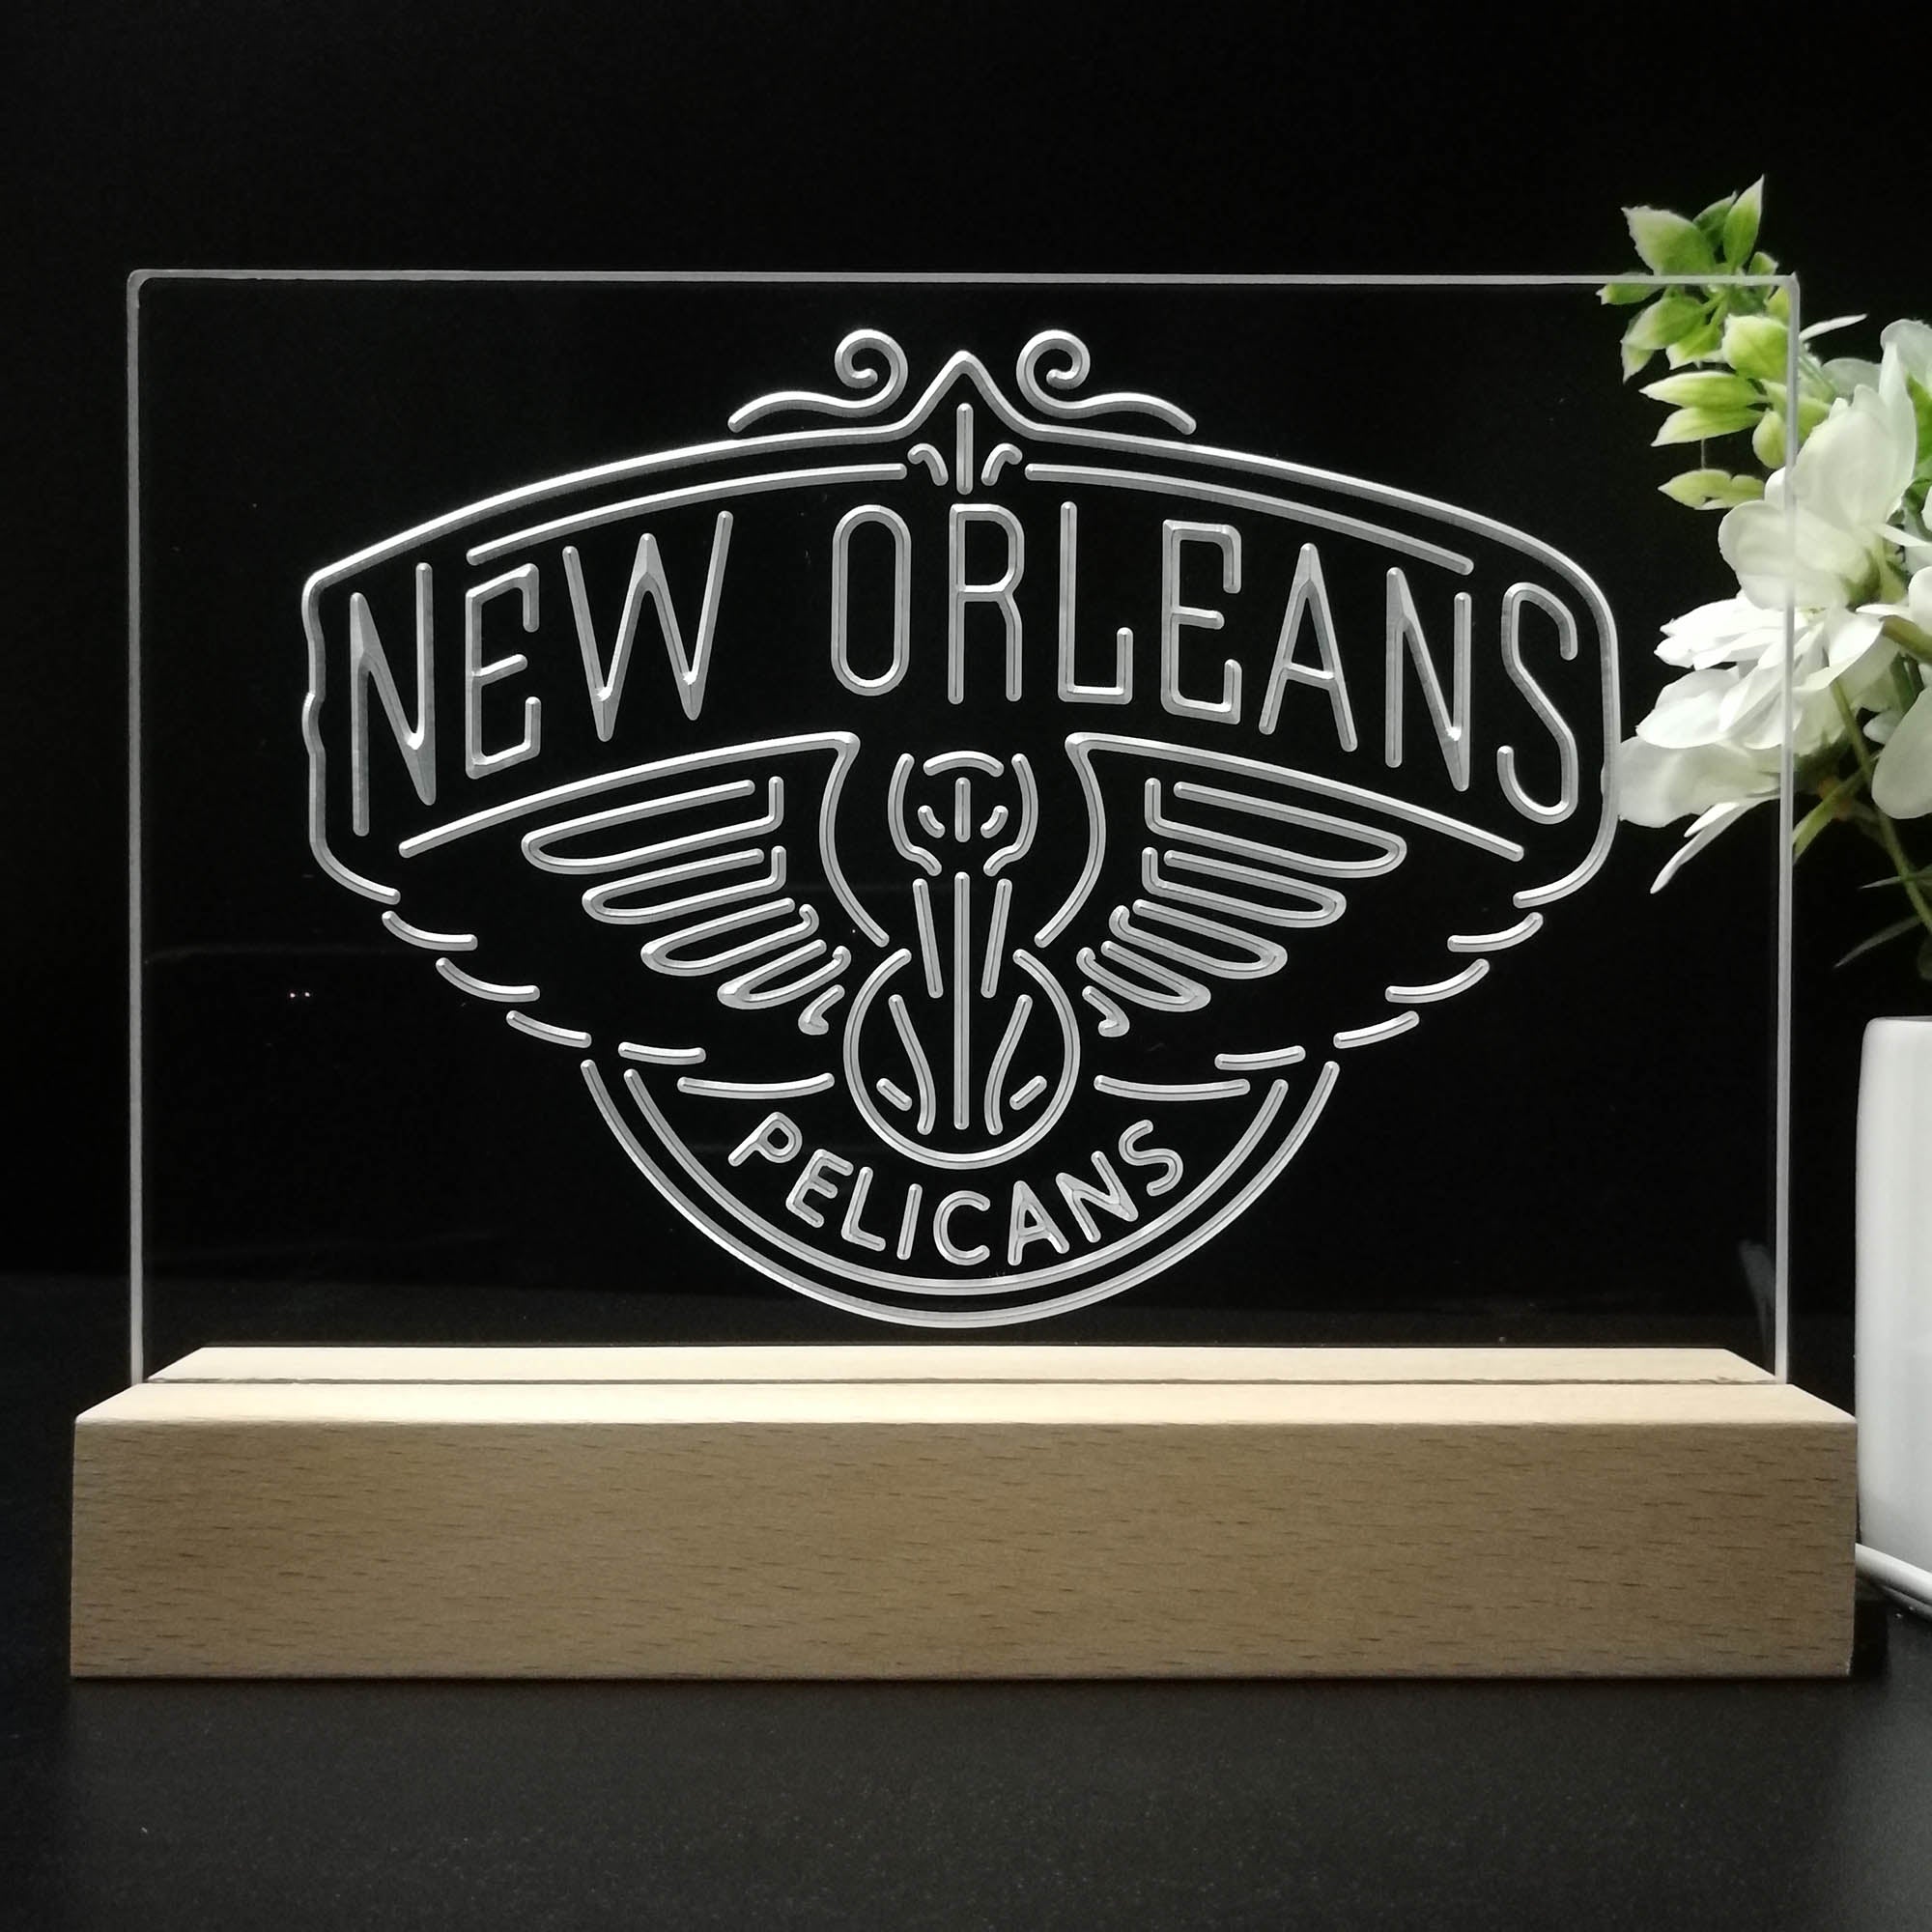 New Orleans Pelicans 3D Illusion Night Light Desk Lamp